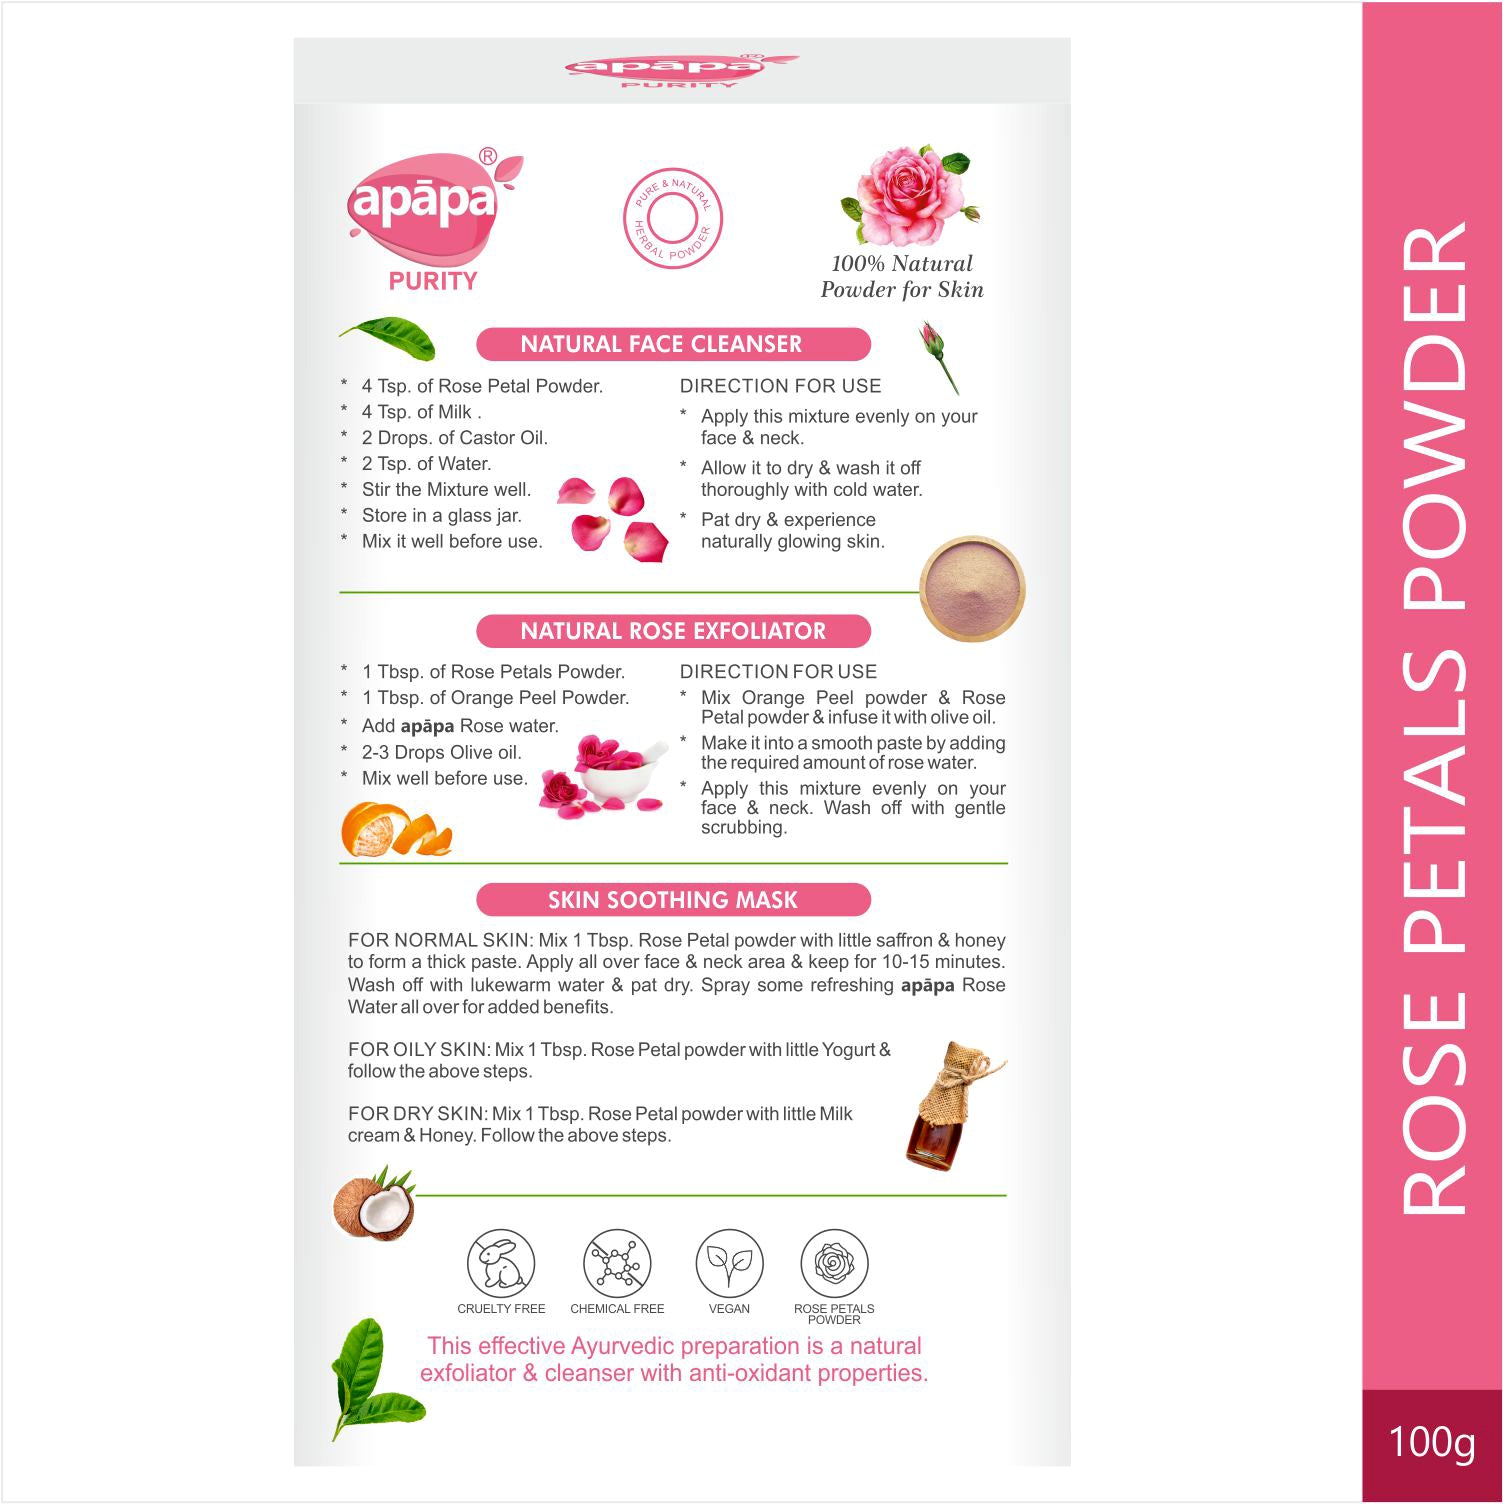 APĀPA Antioxidant Rose Petal Powder